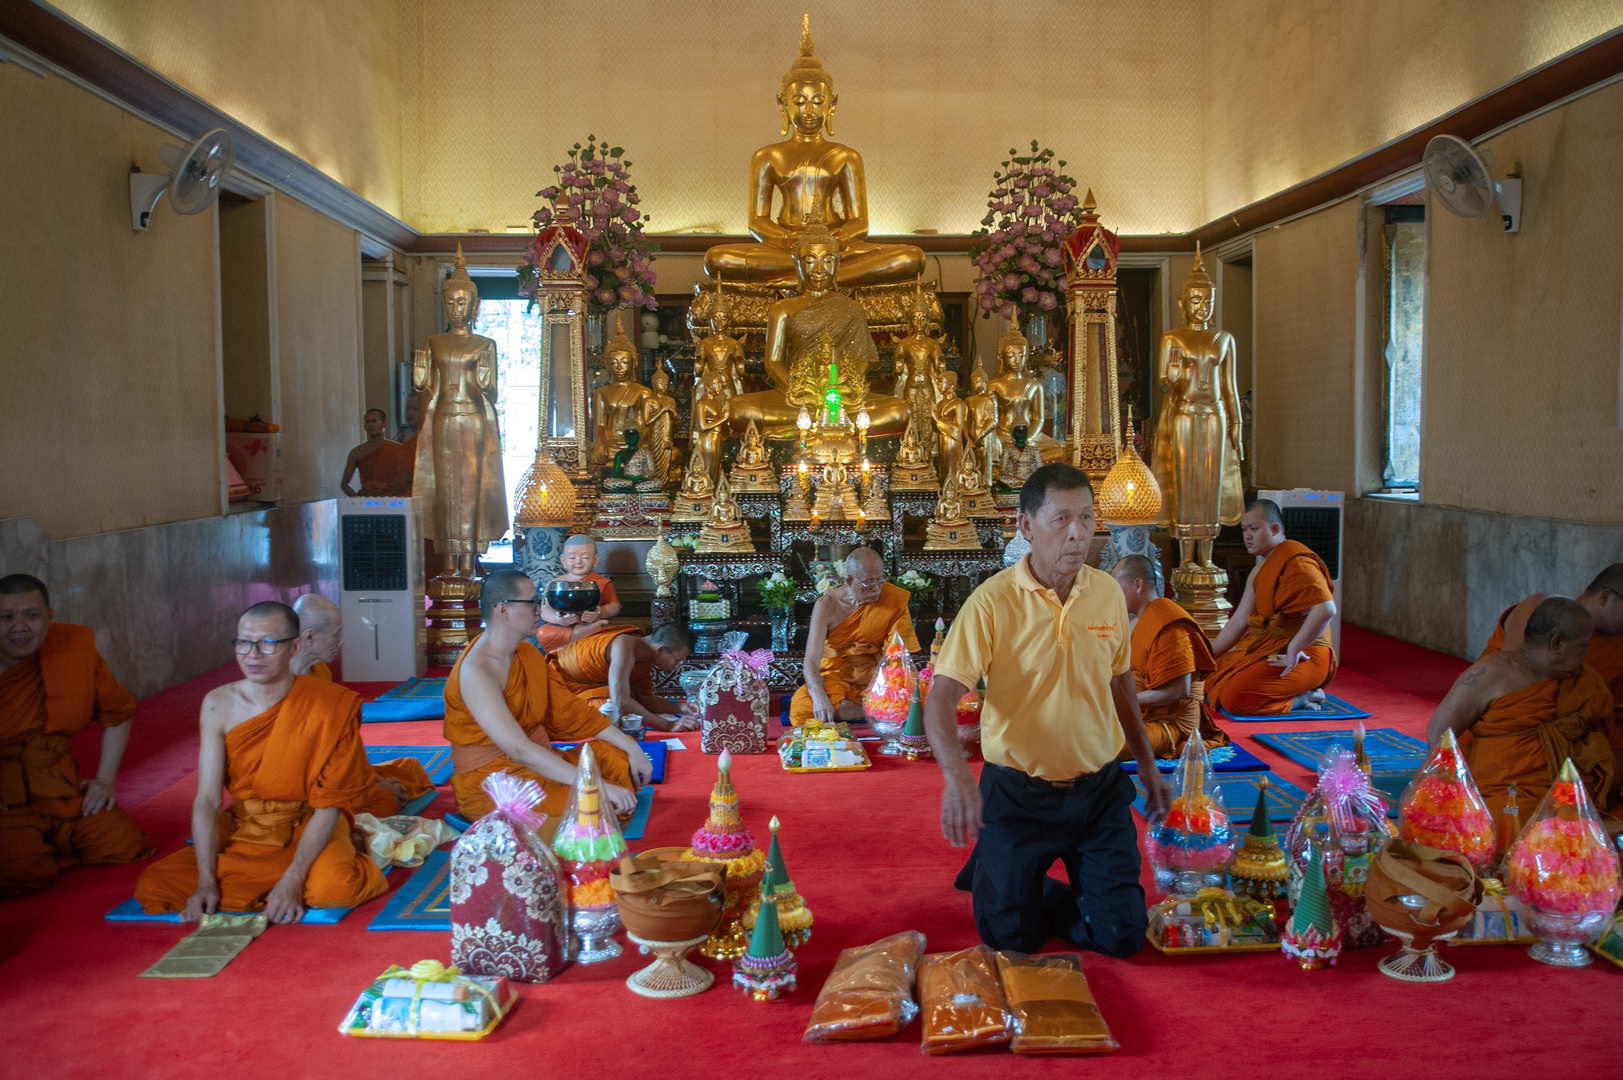 Inside the Yannova temple